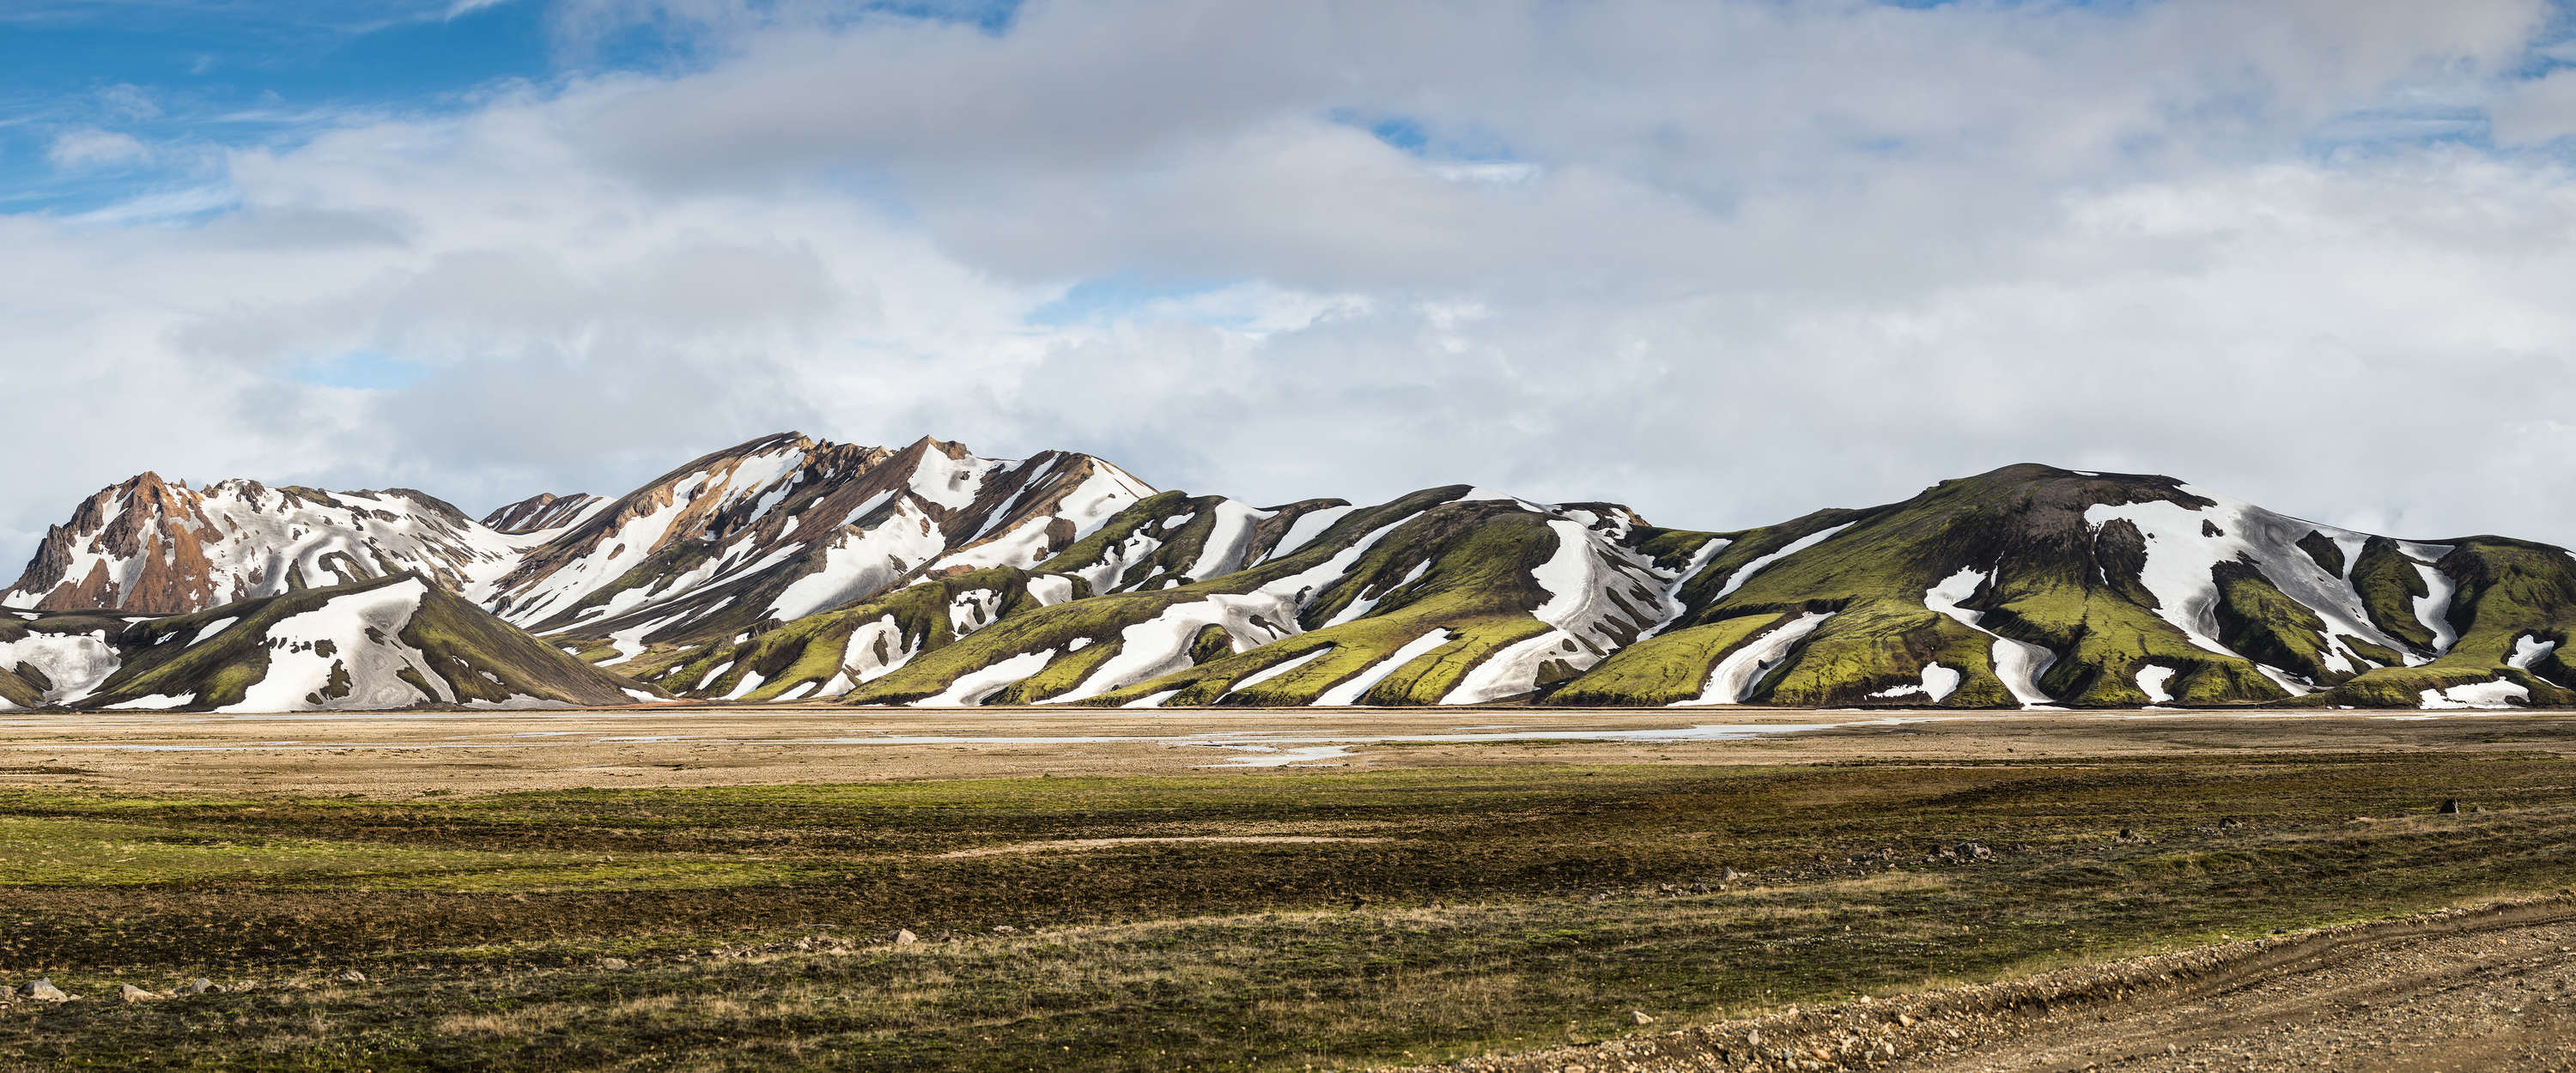             Panorama mural on Icelandic mountains
        